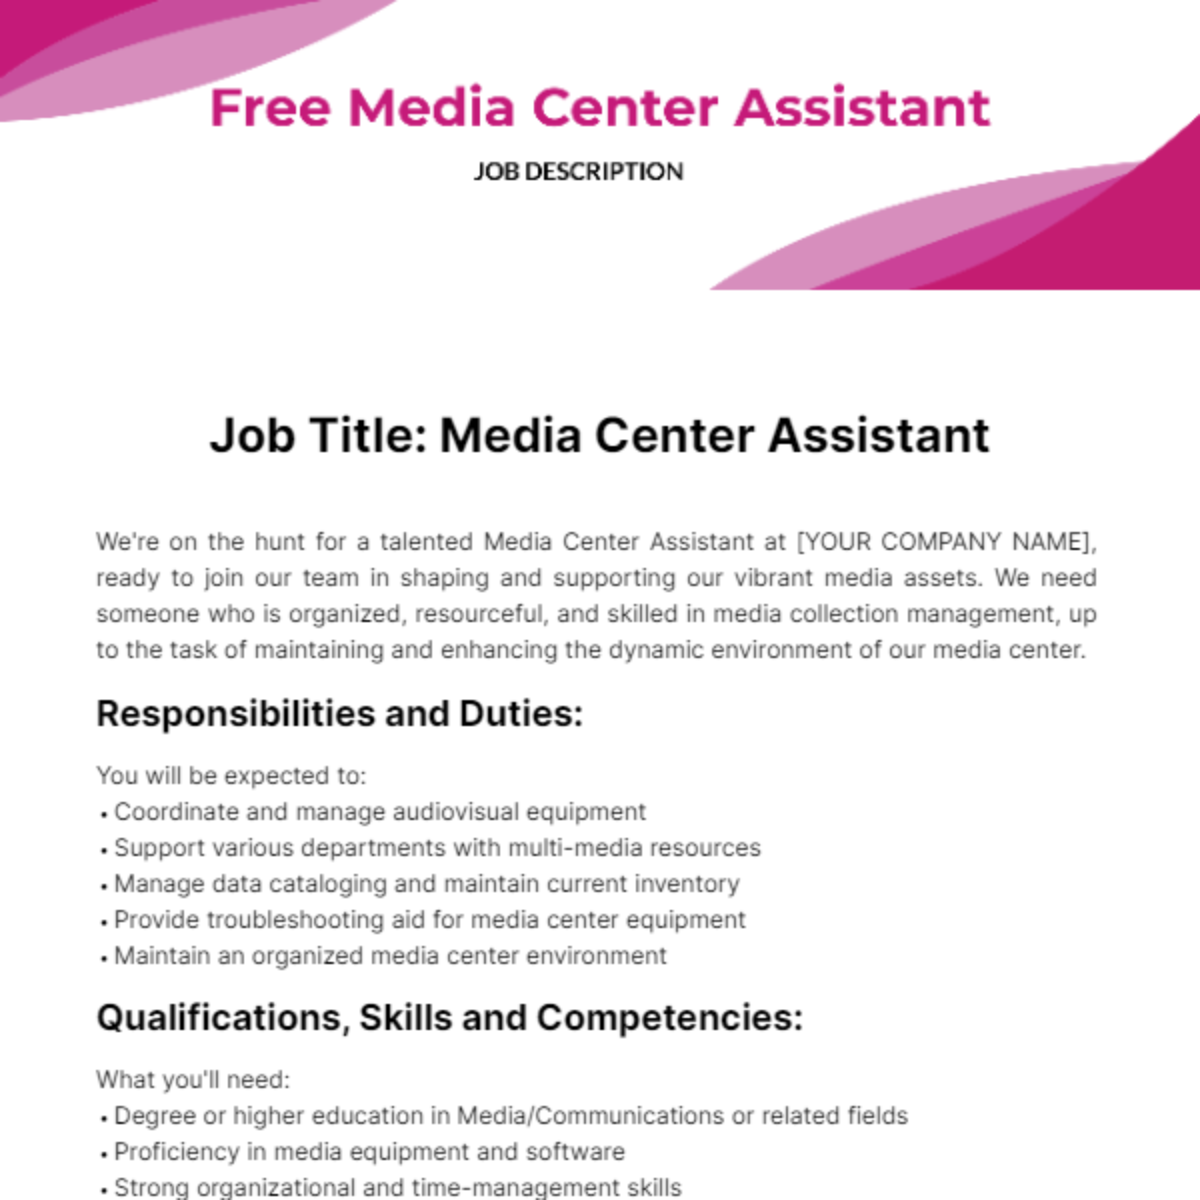 Free Media Center Assistant Job Description Template